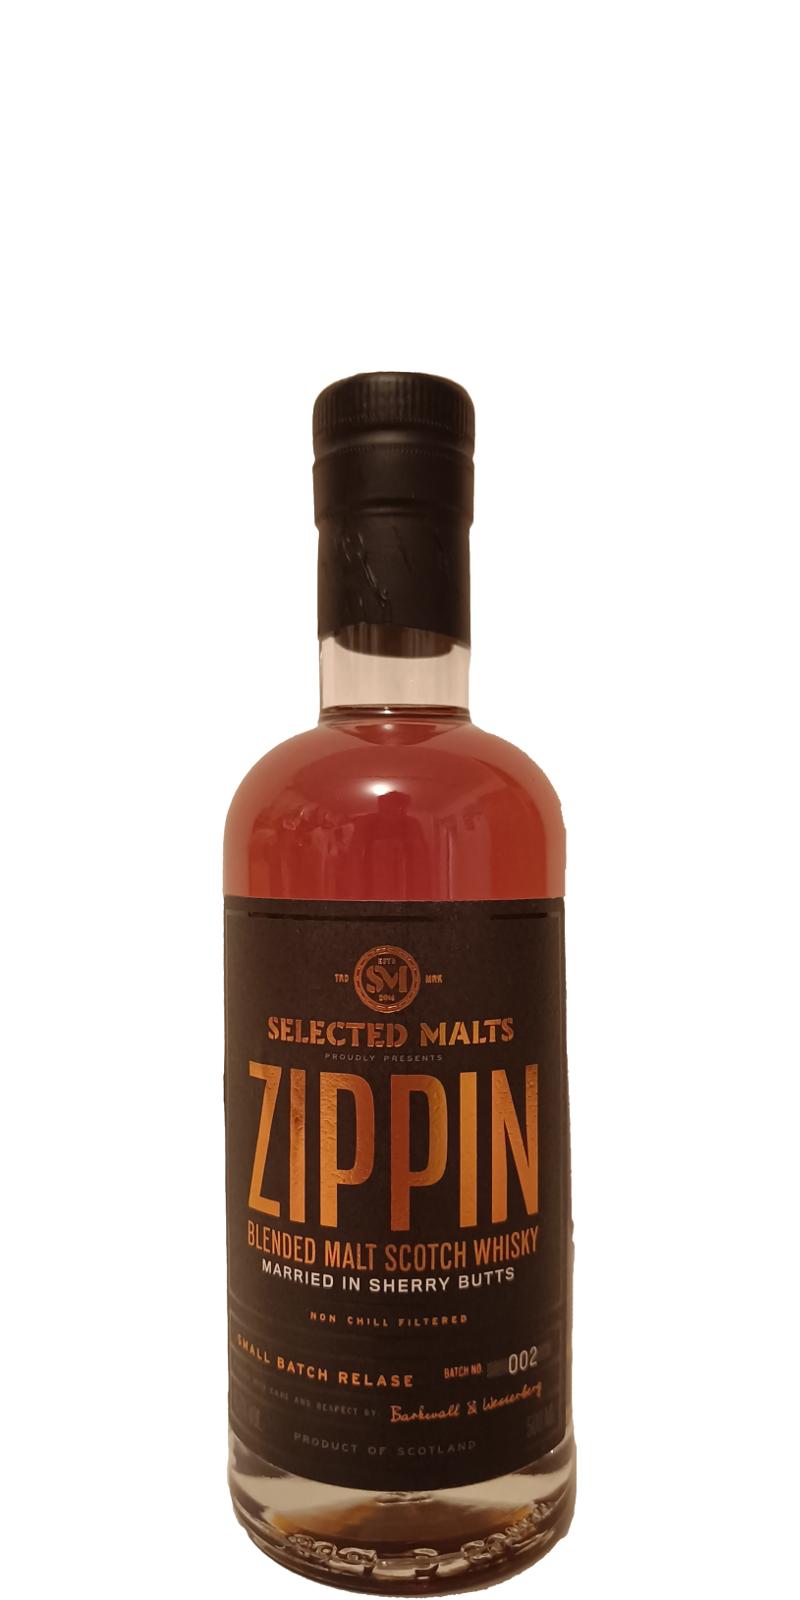 Zippin Blended Malt Scotch Whisky Barkevall & Westerberg 58.9% 500ml